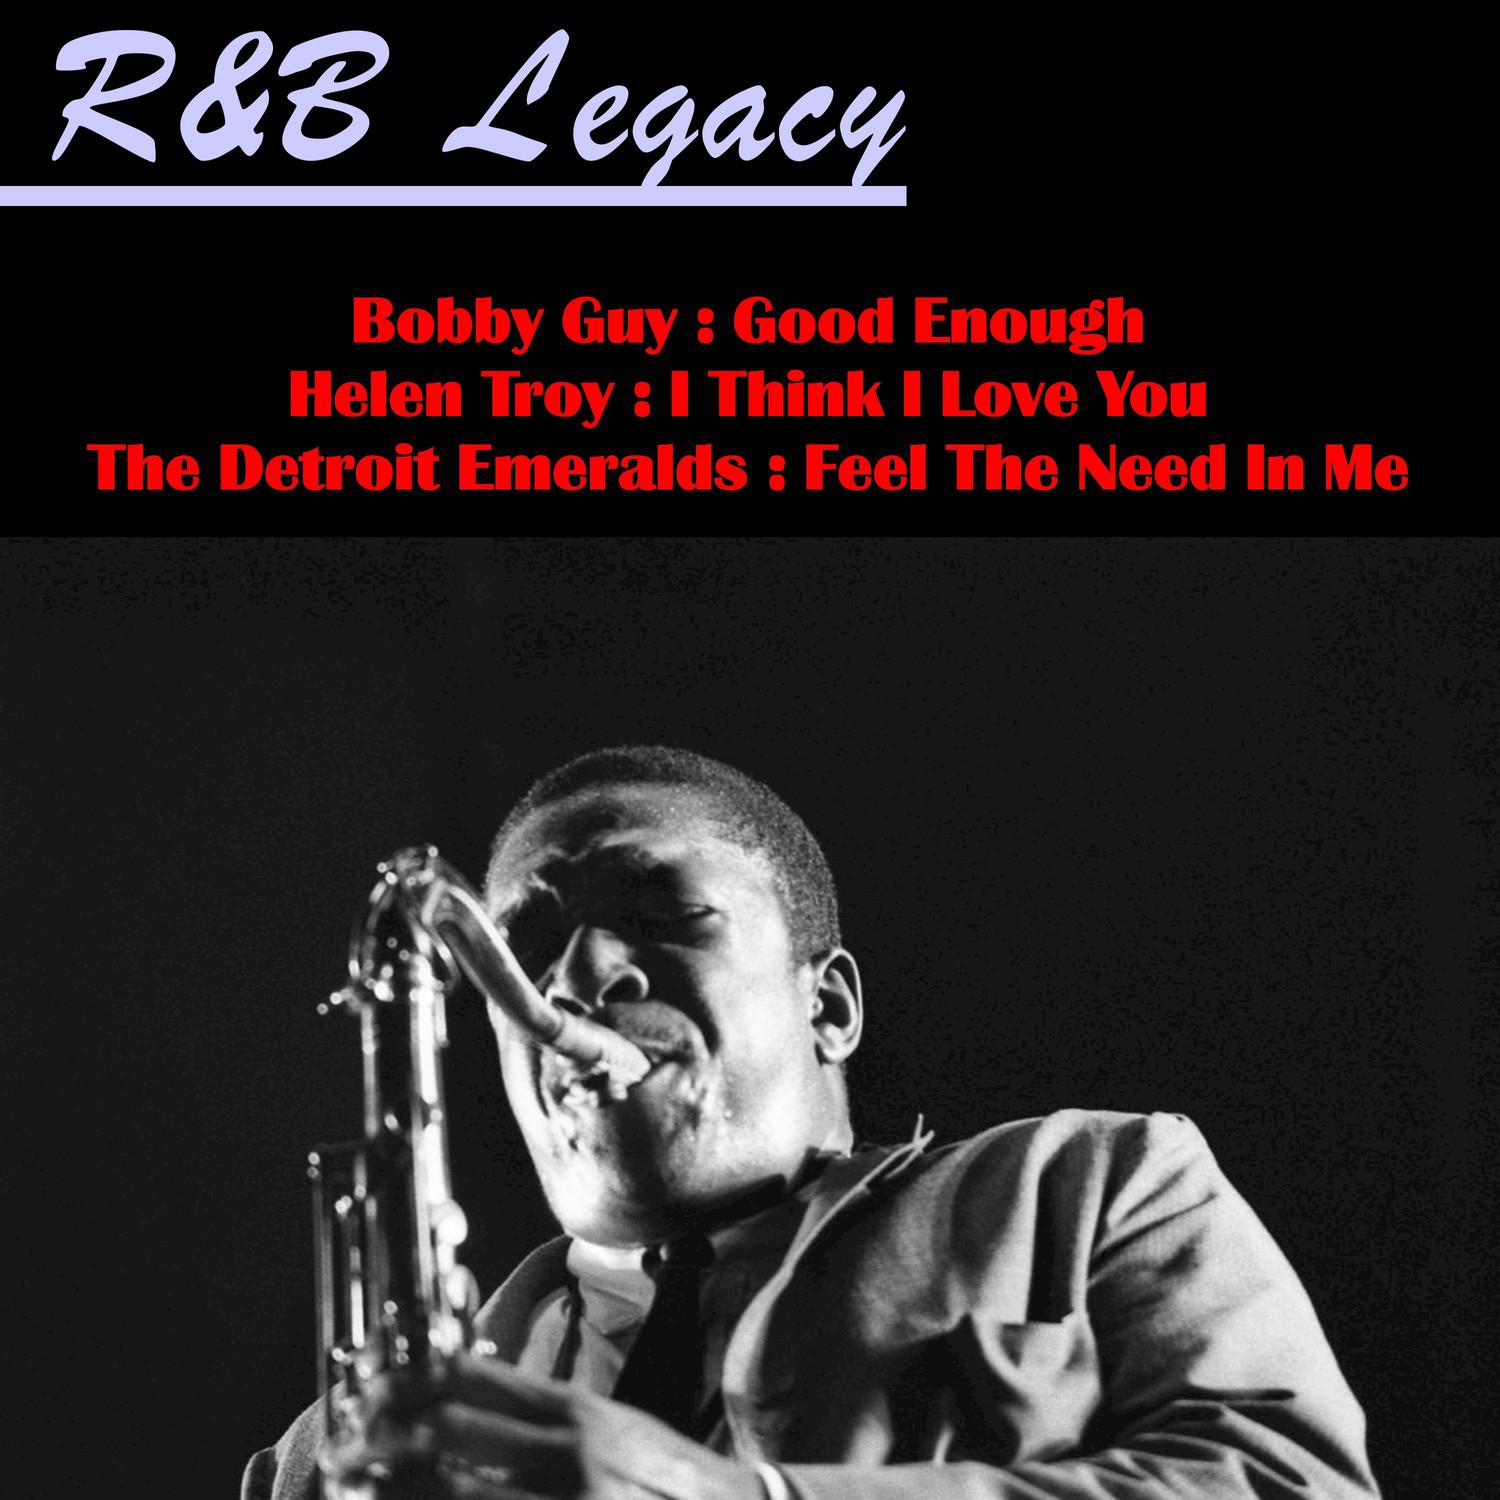 R&B Legacy